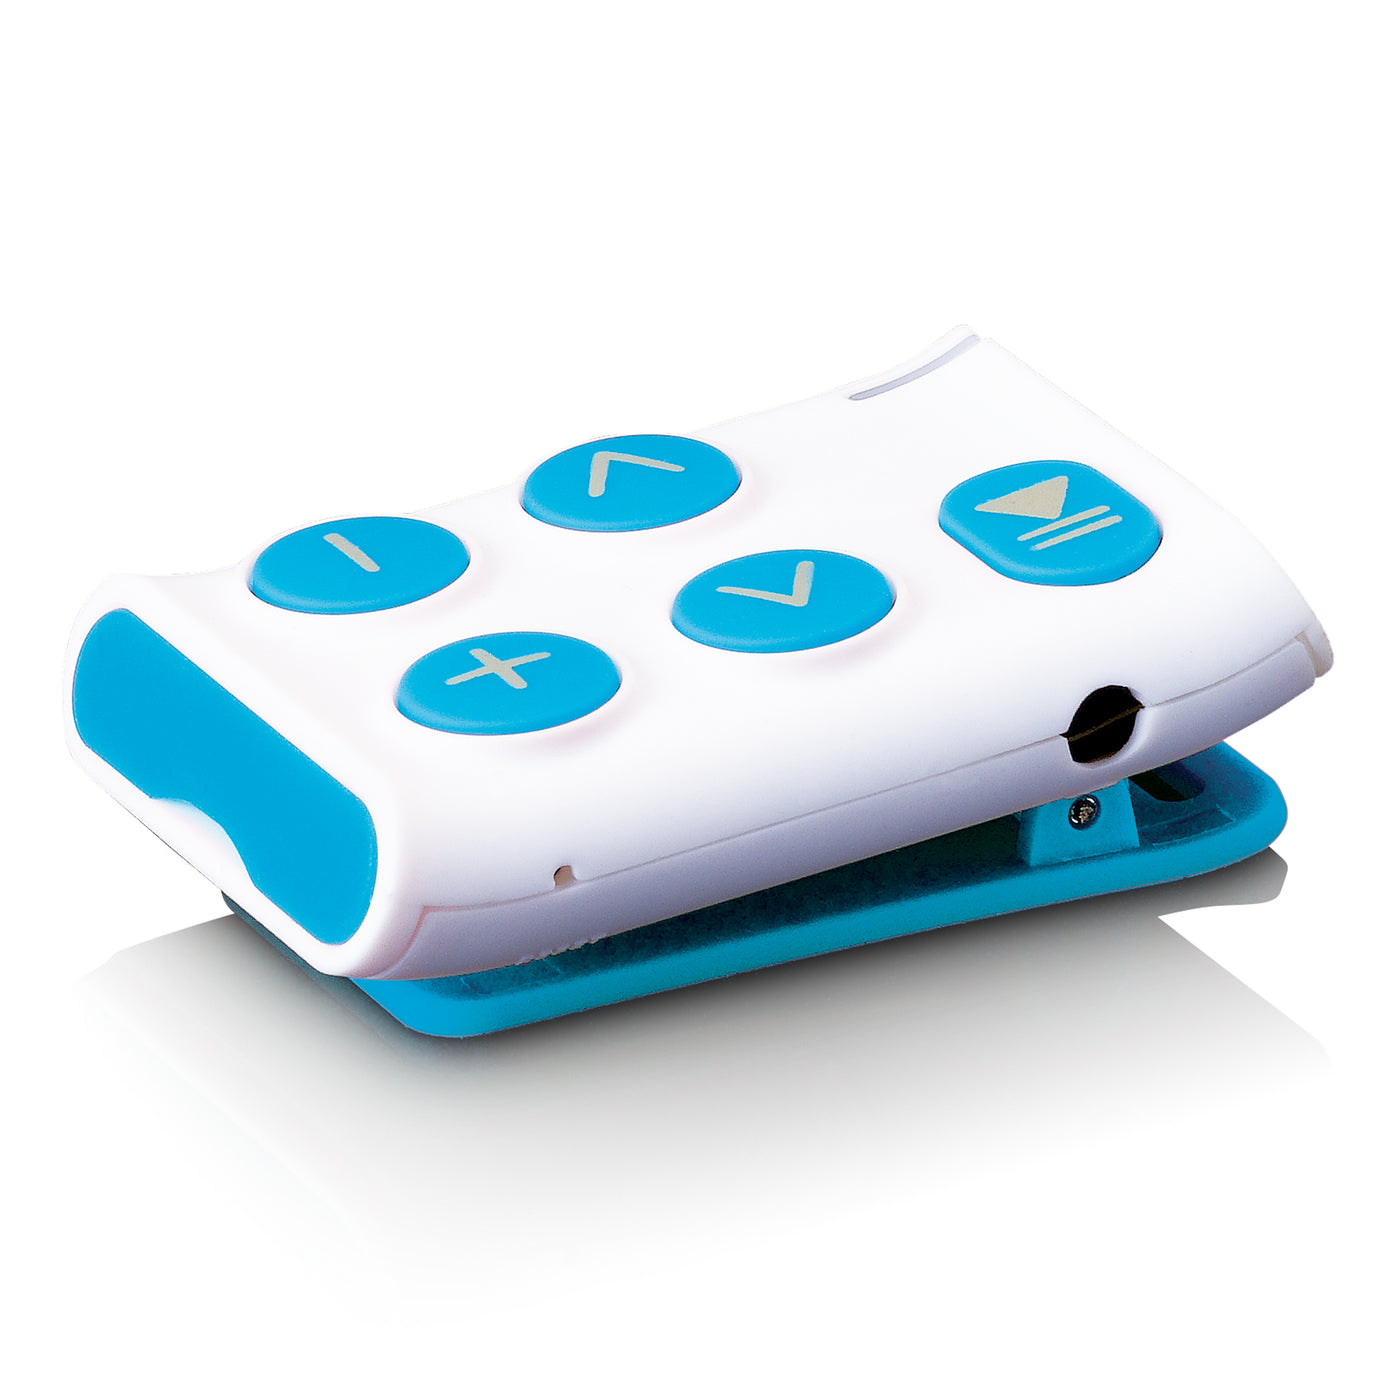 LENCO Xemio-154BU - Sport MP3 Player Incl. sport earbuds 4GB micro SD card - Blue